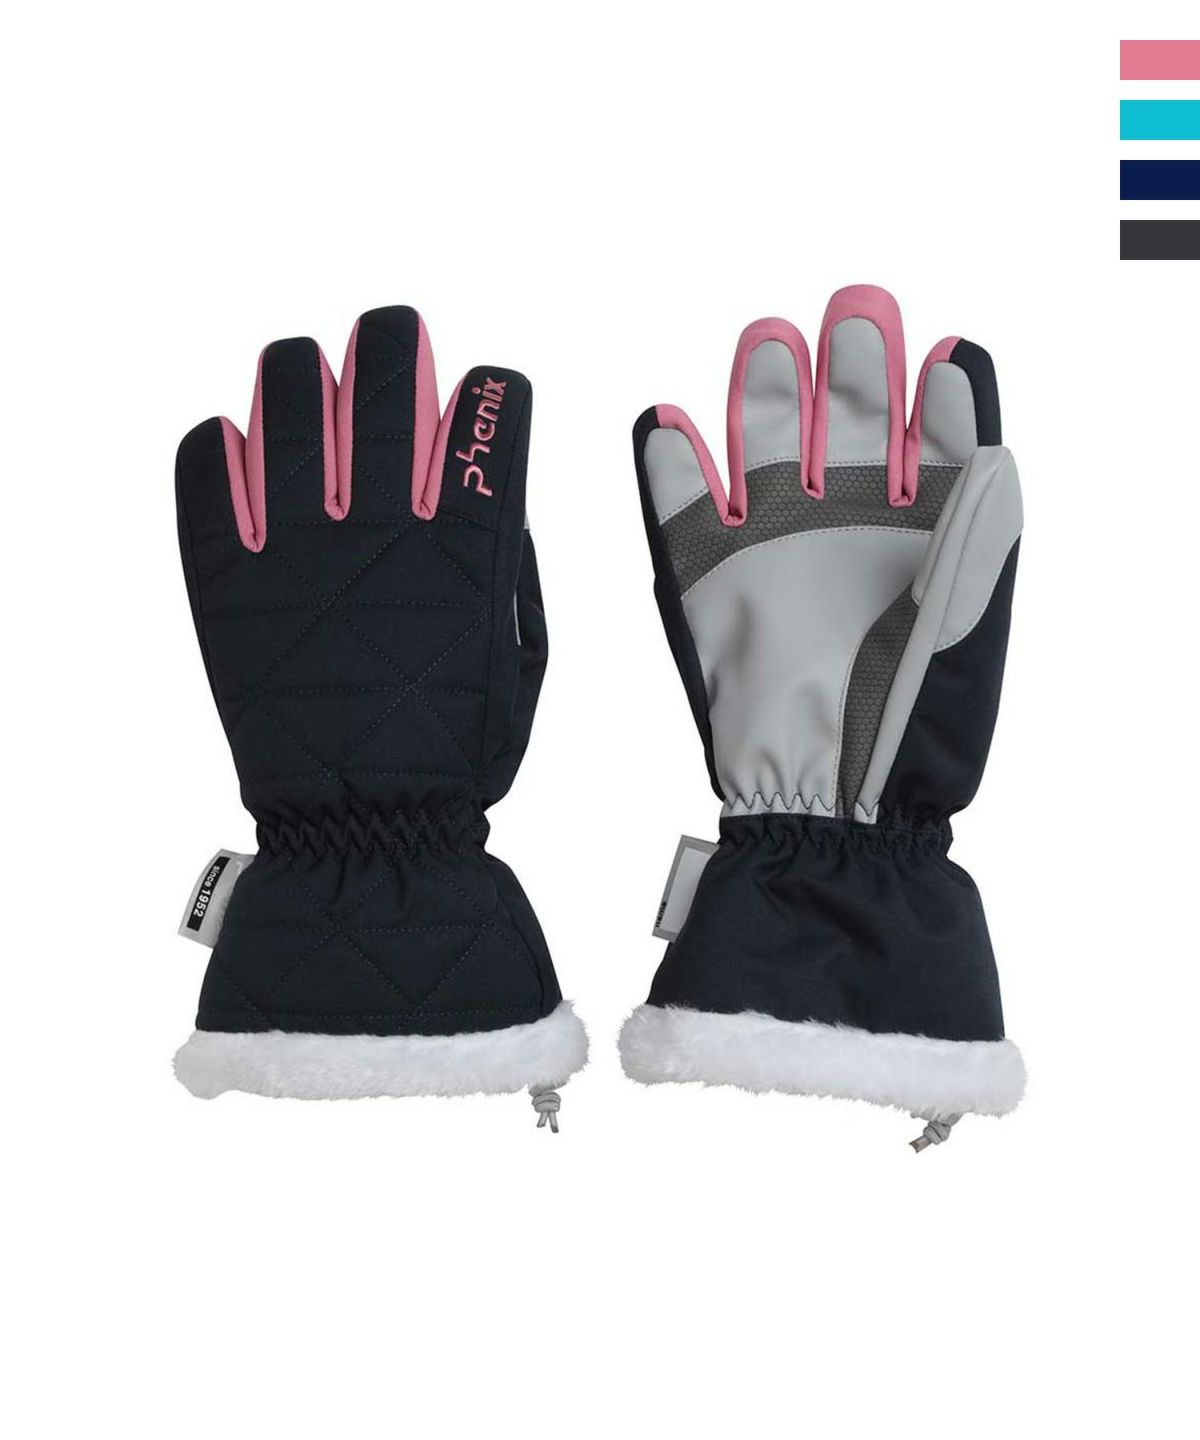 phenix(フェニックス)Snow White Junior Gloves キッズ/スキー